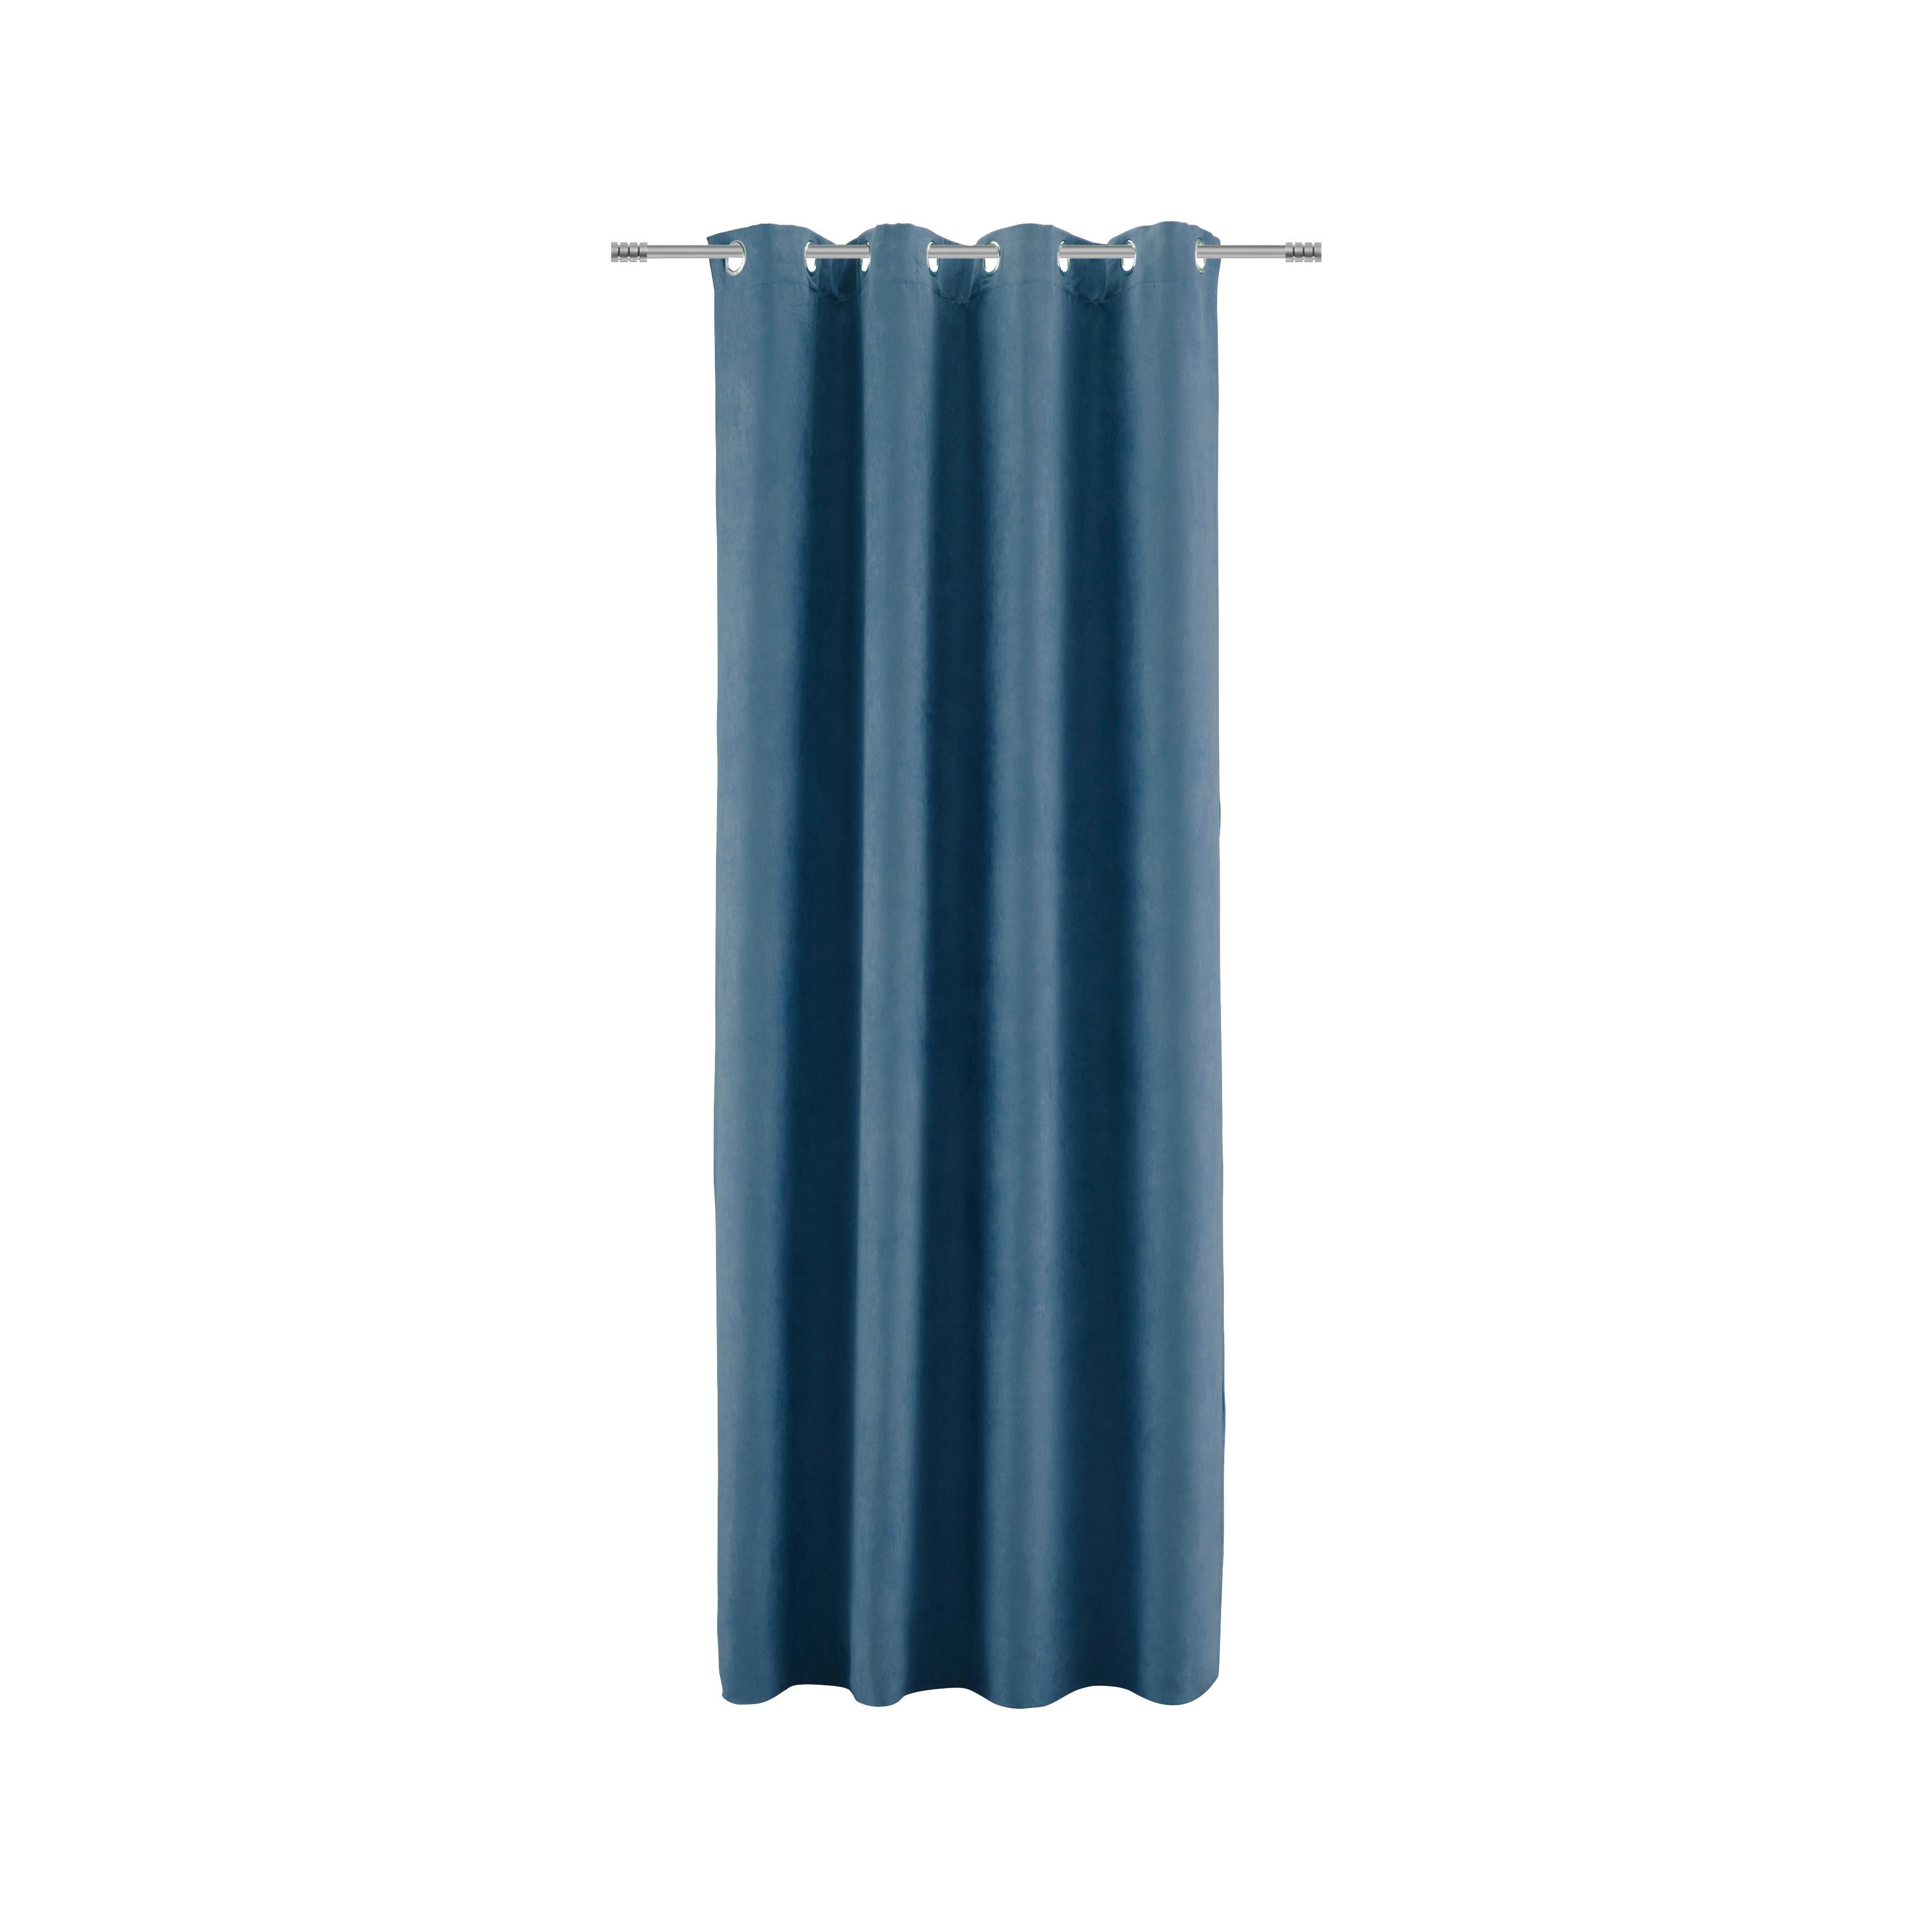 Perdea inele capsă Velours - albastru, Konventionell, textil (140/245cm) - Modern Living